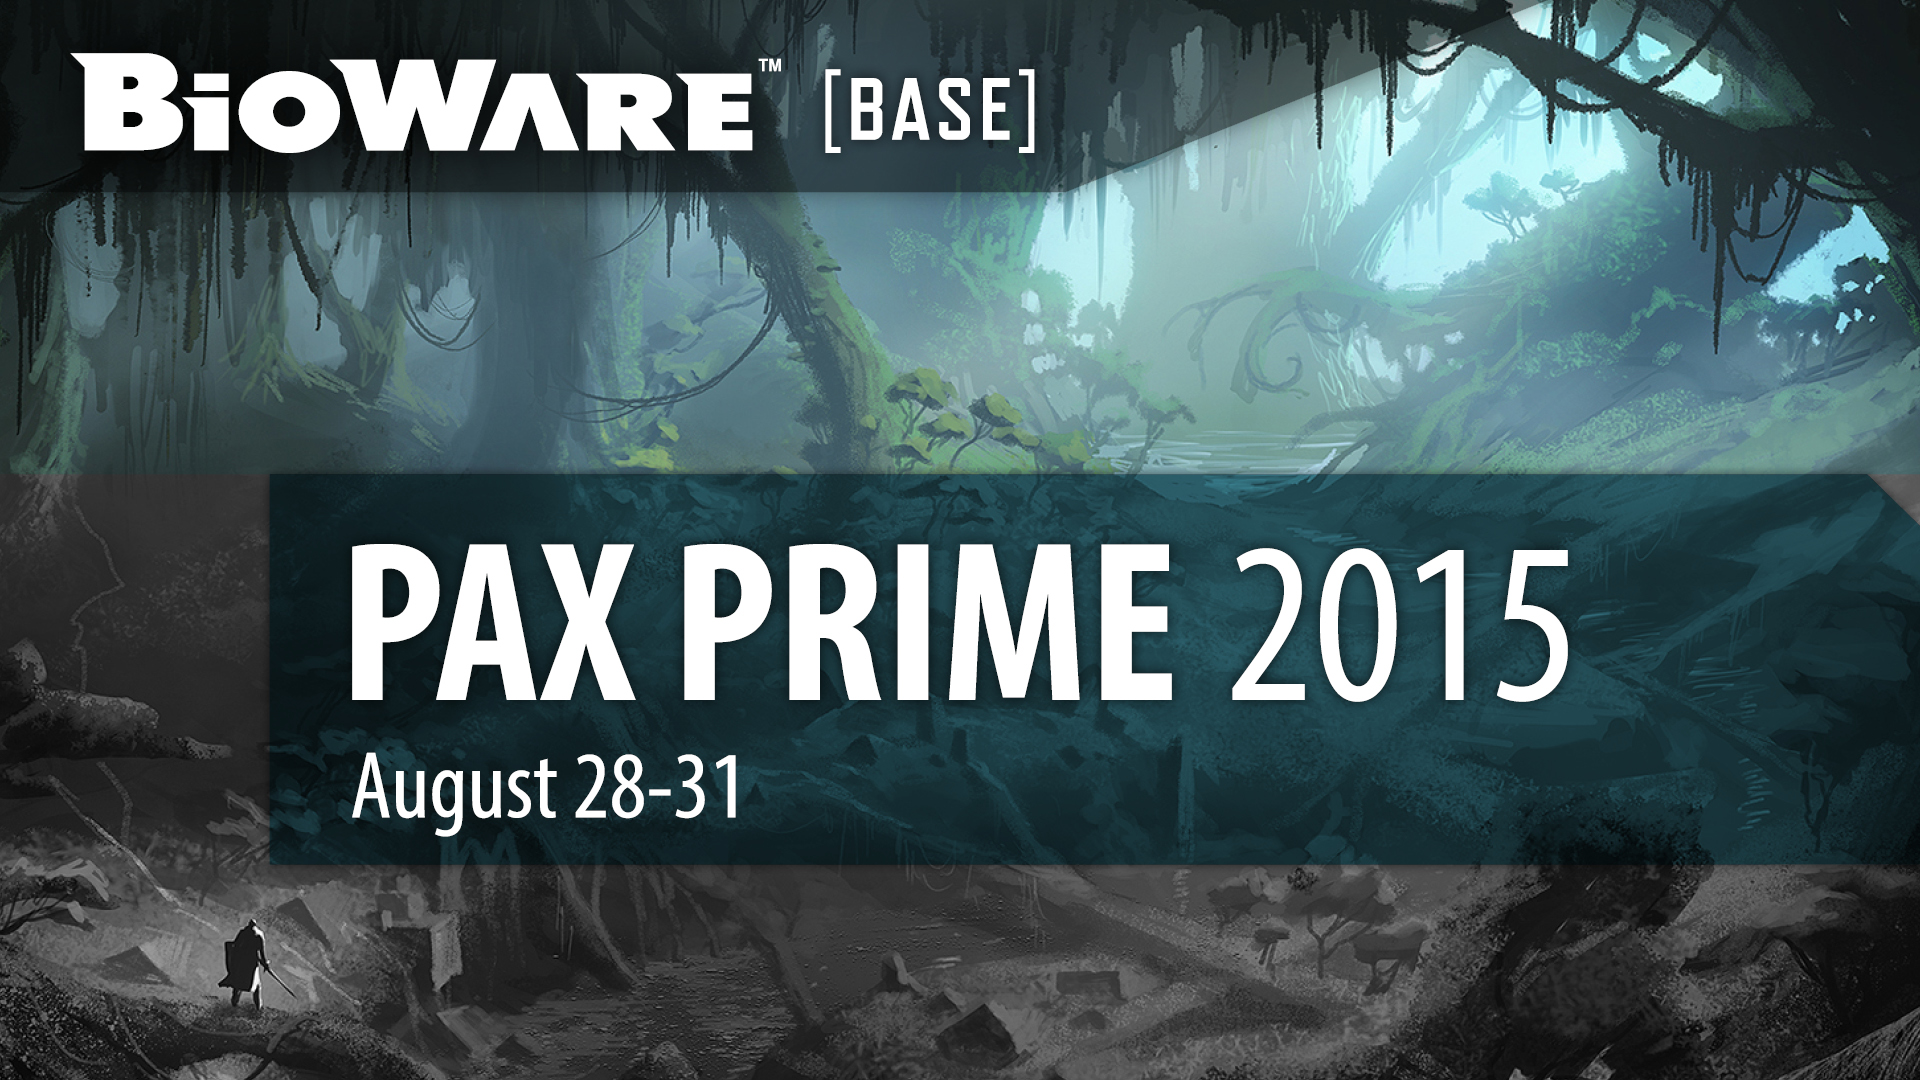 BioWare Base at PAX Prime